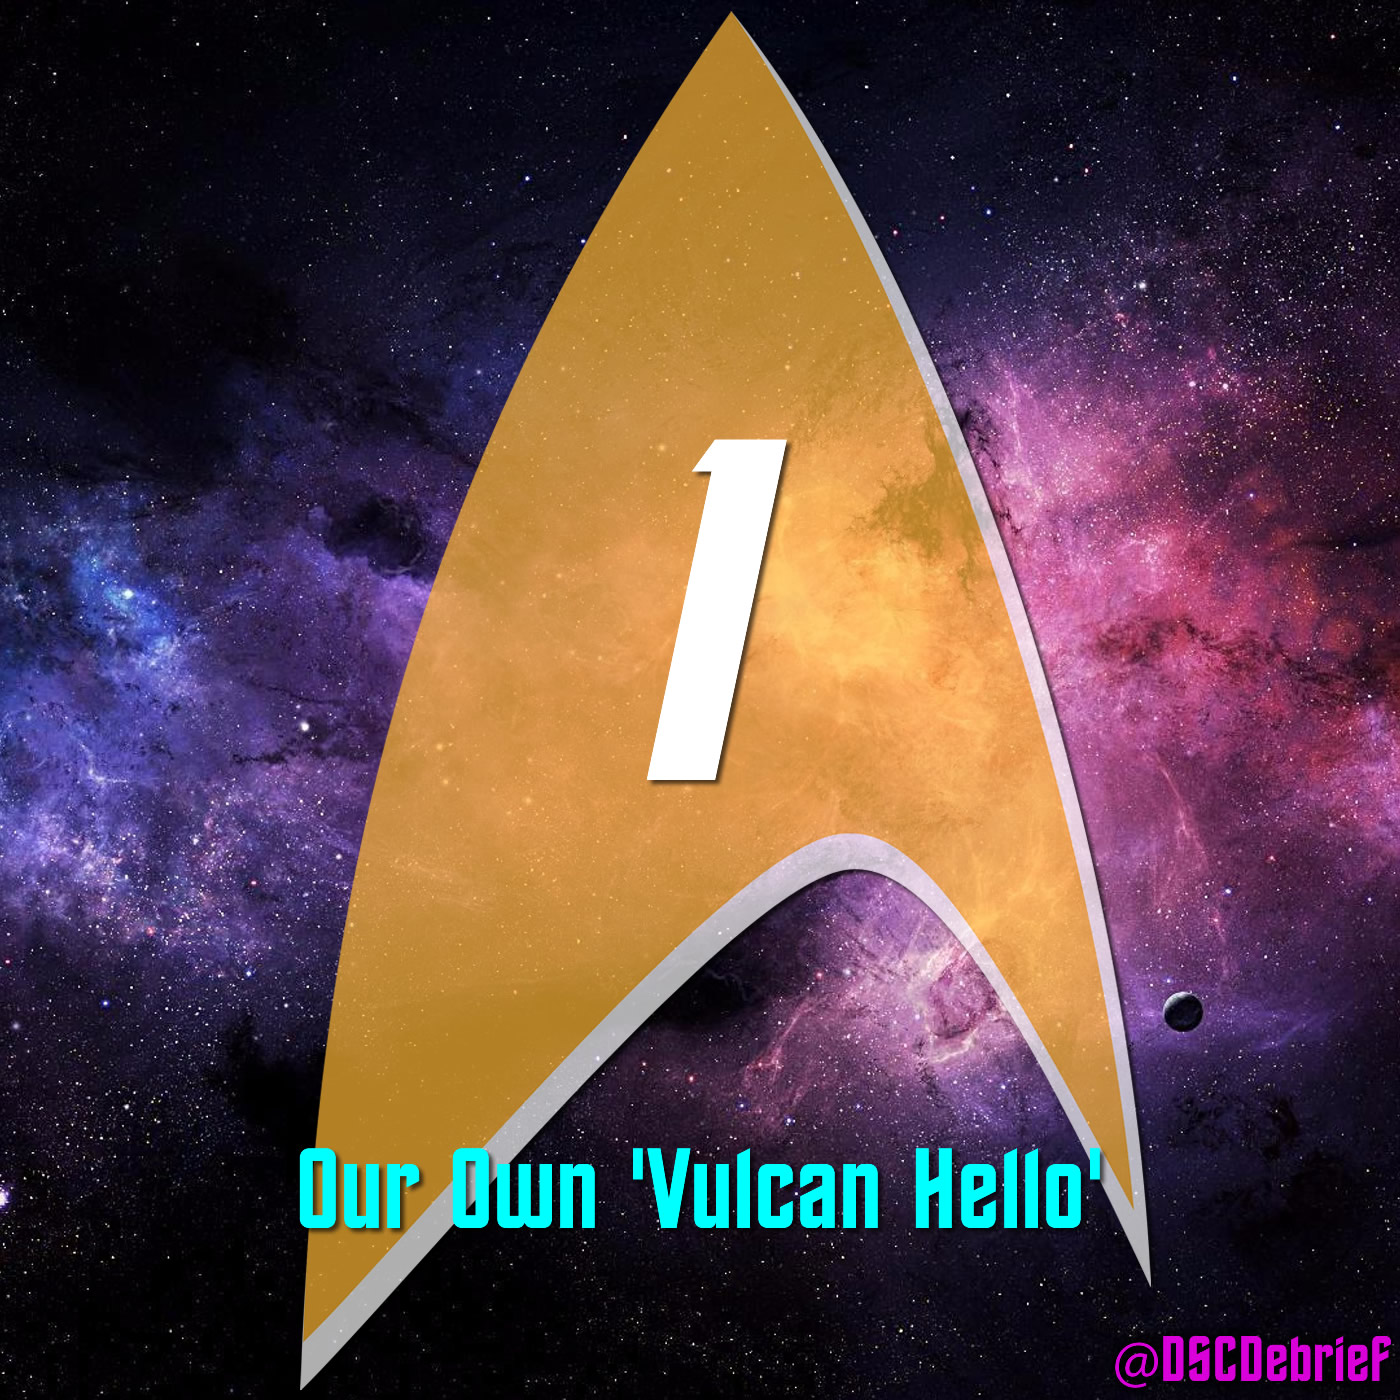 Episode 1 - Our Own Vulcan Hello